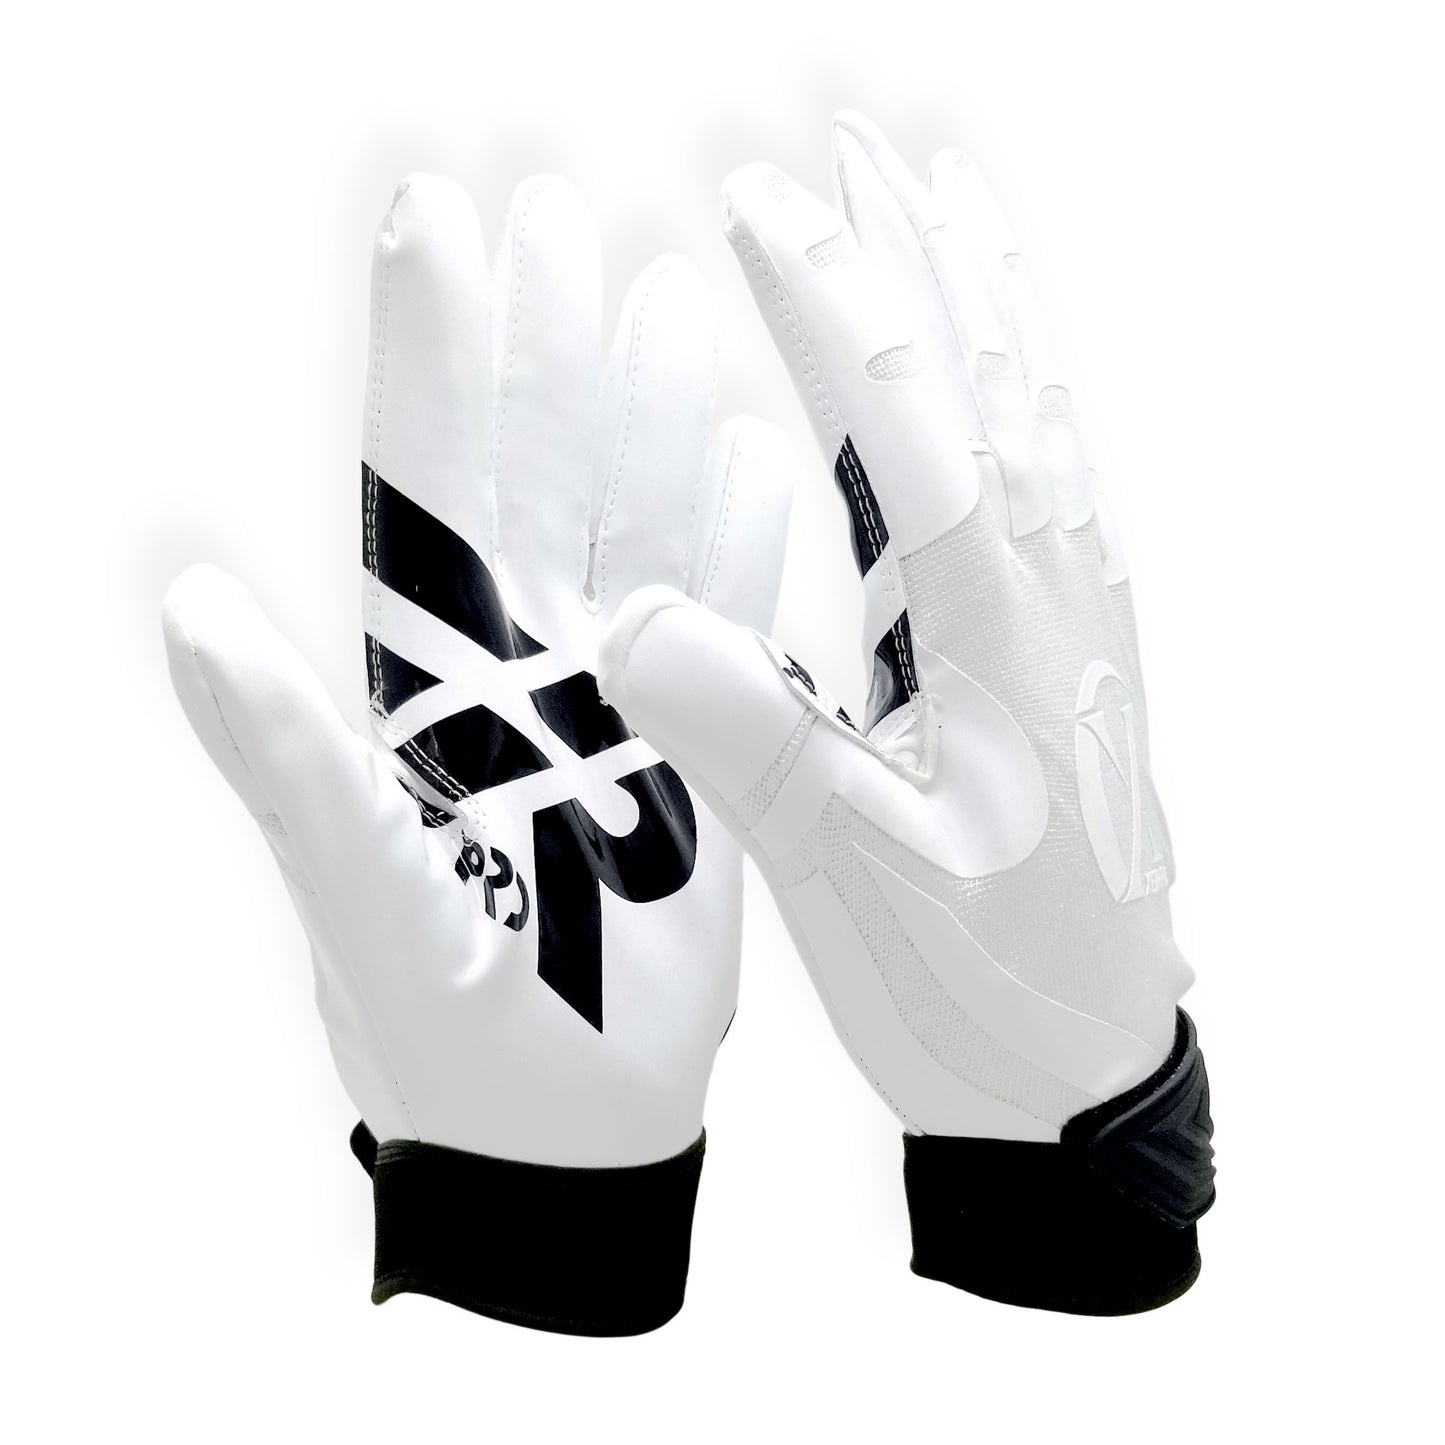 XEIR PRO Football Receiver Gloves (Adult Size) - White